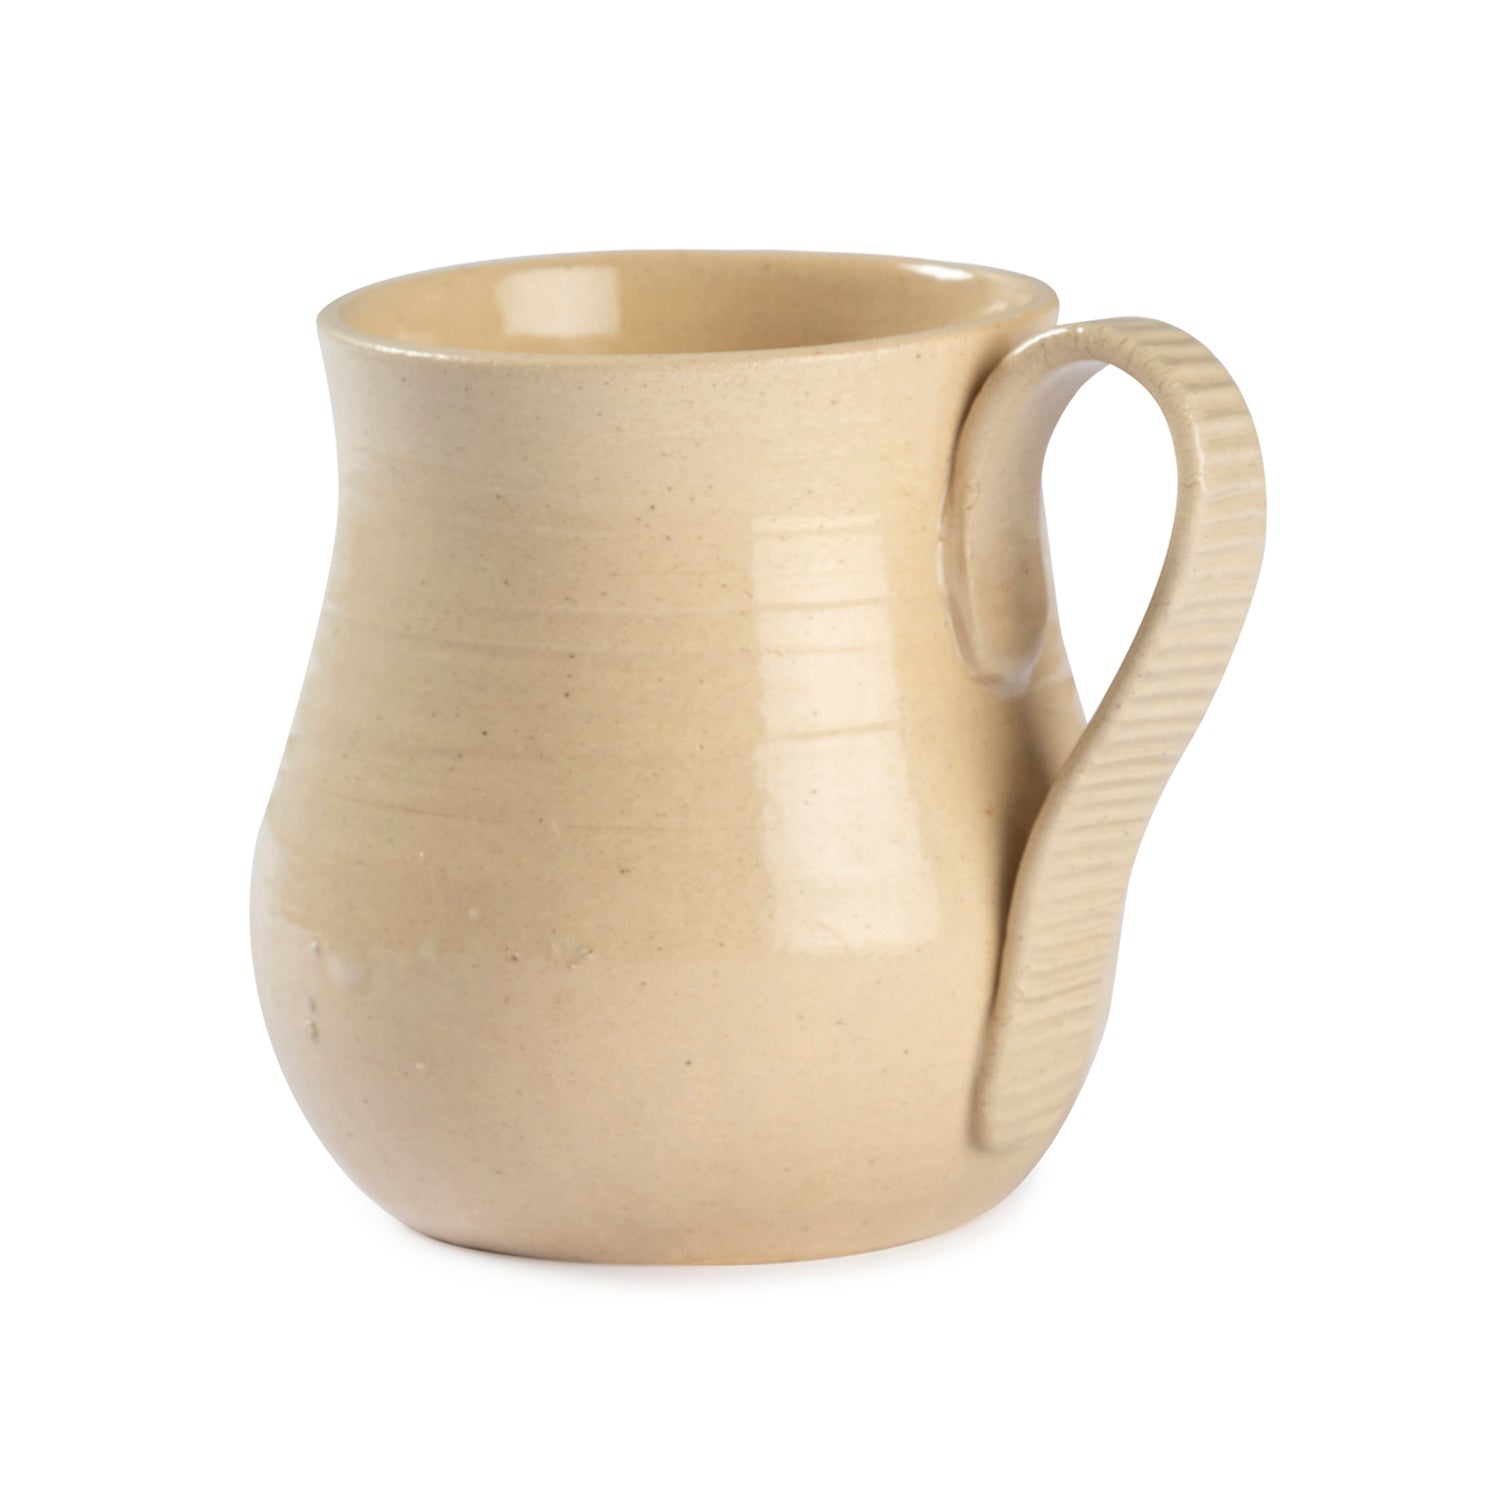 Stoneware Ceramic Mugs - 3x4.5